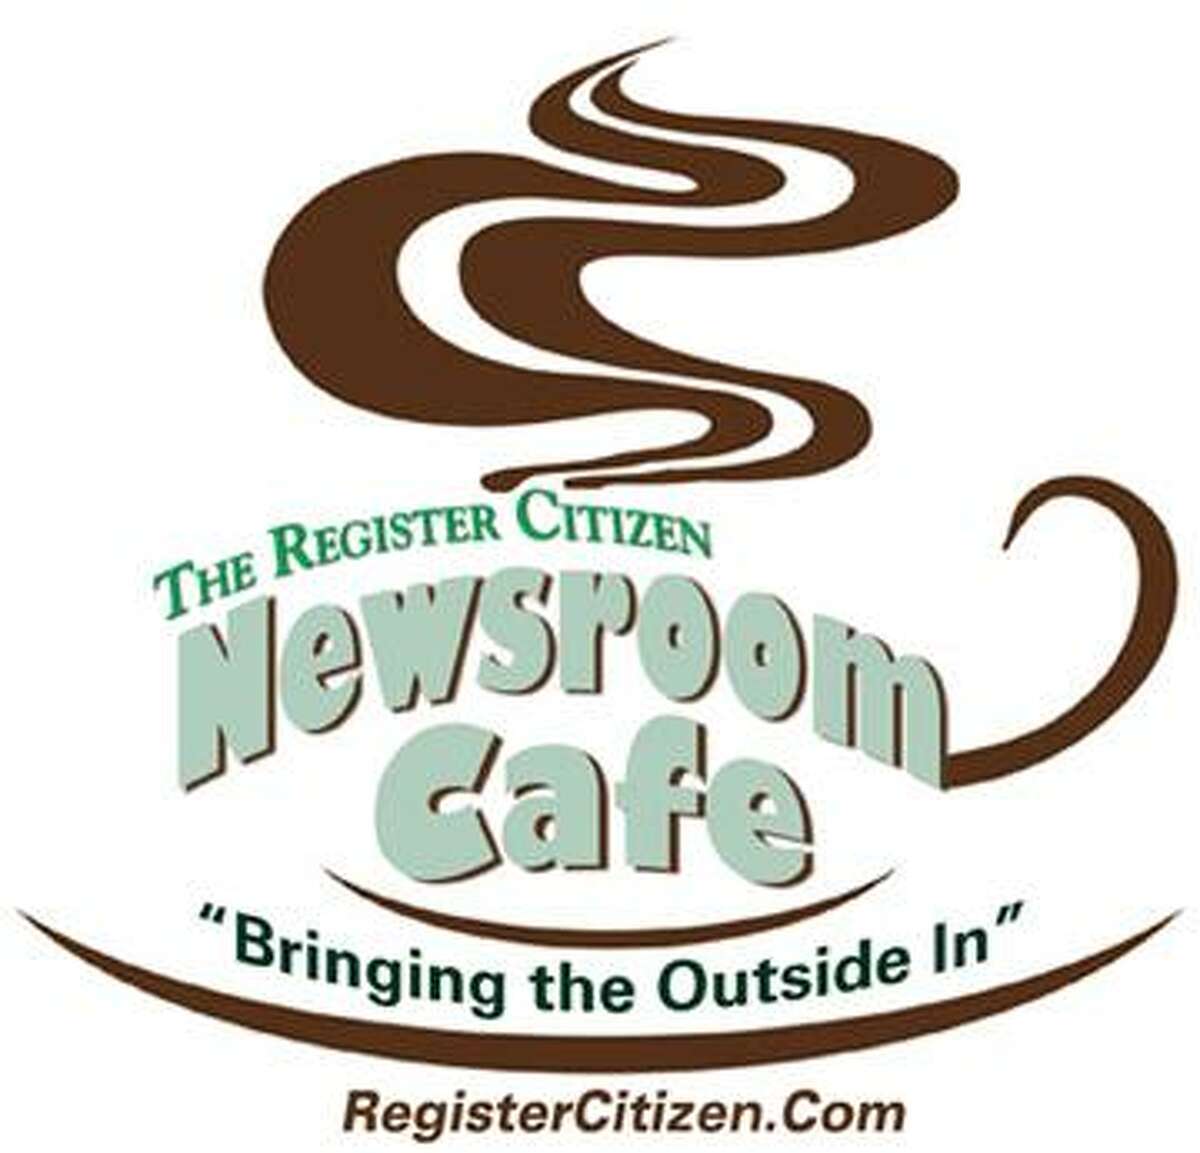 The Register Citizen Newsroom Cafe opened in December 2010 at 59 Field Street in Torrington.